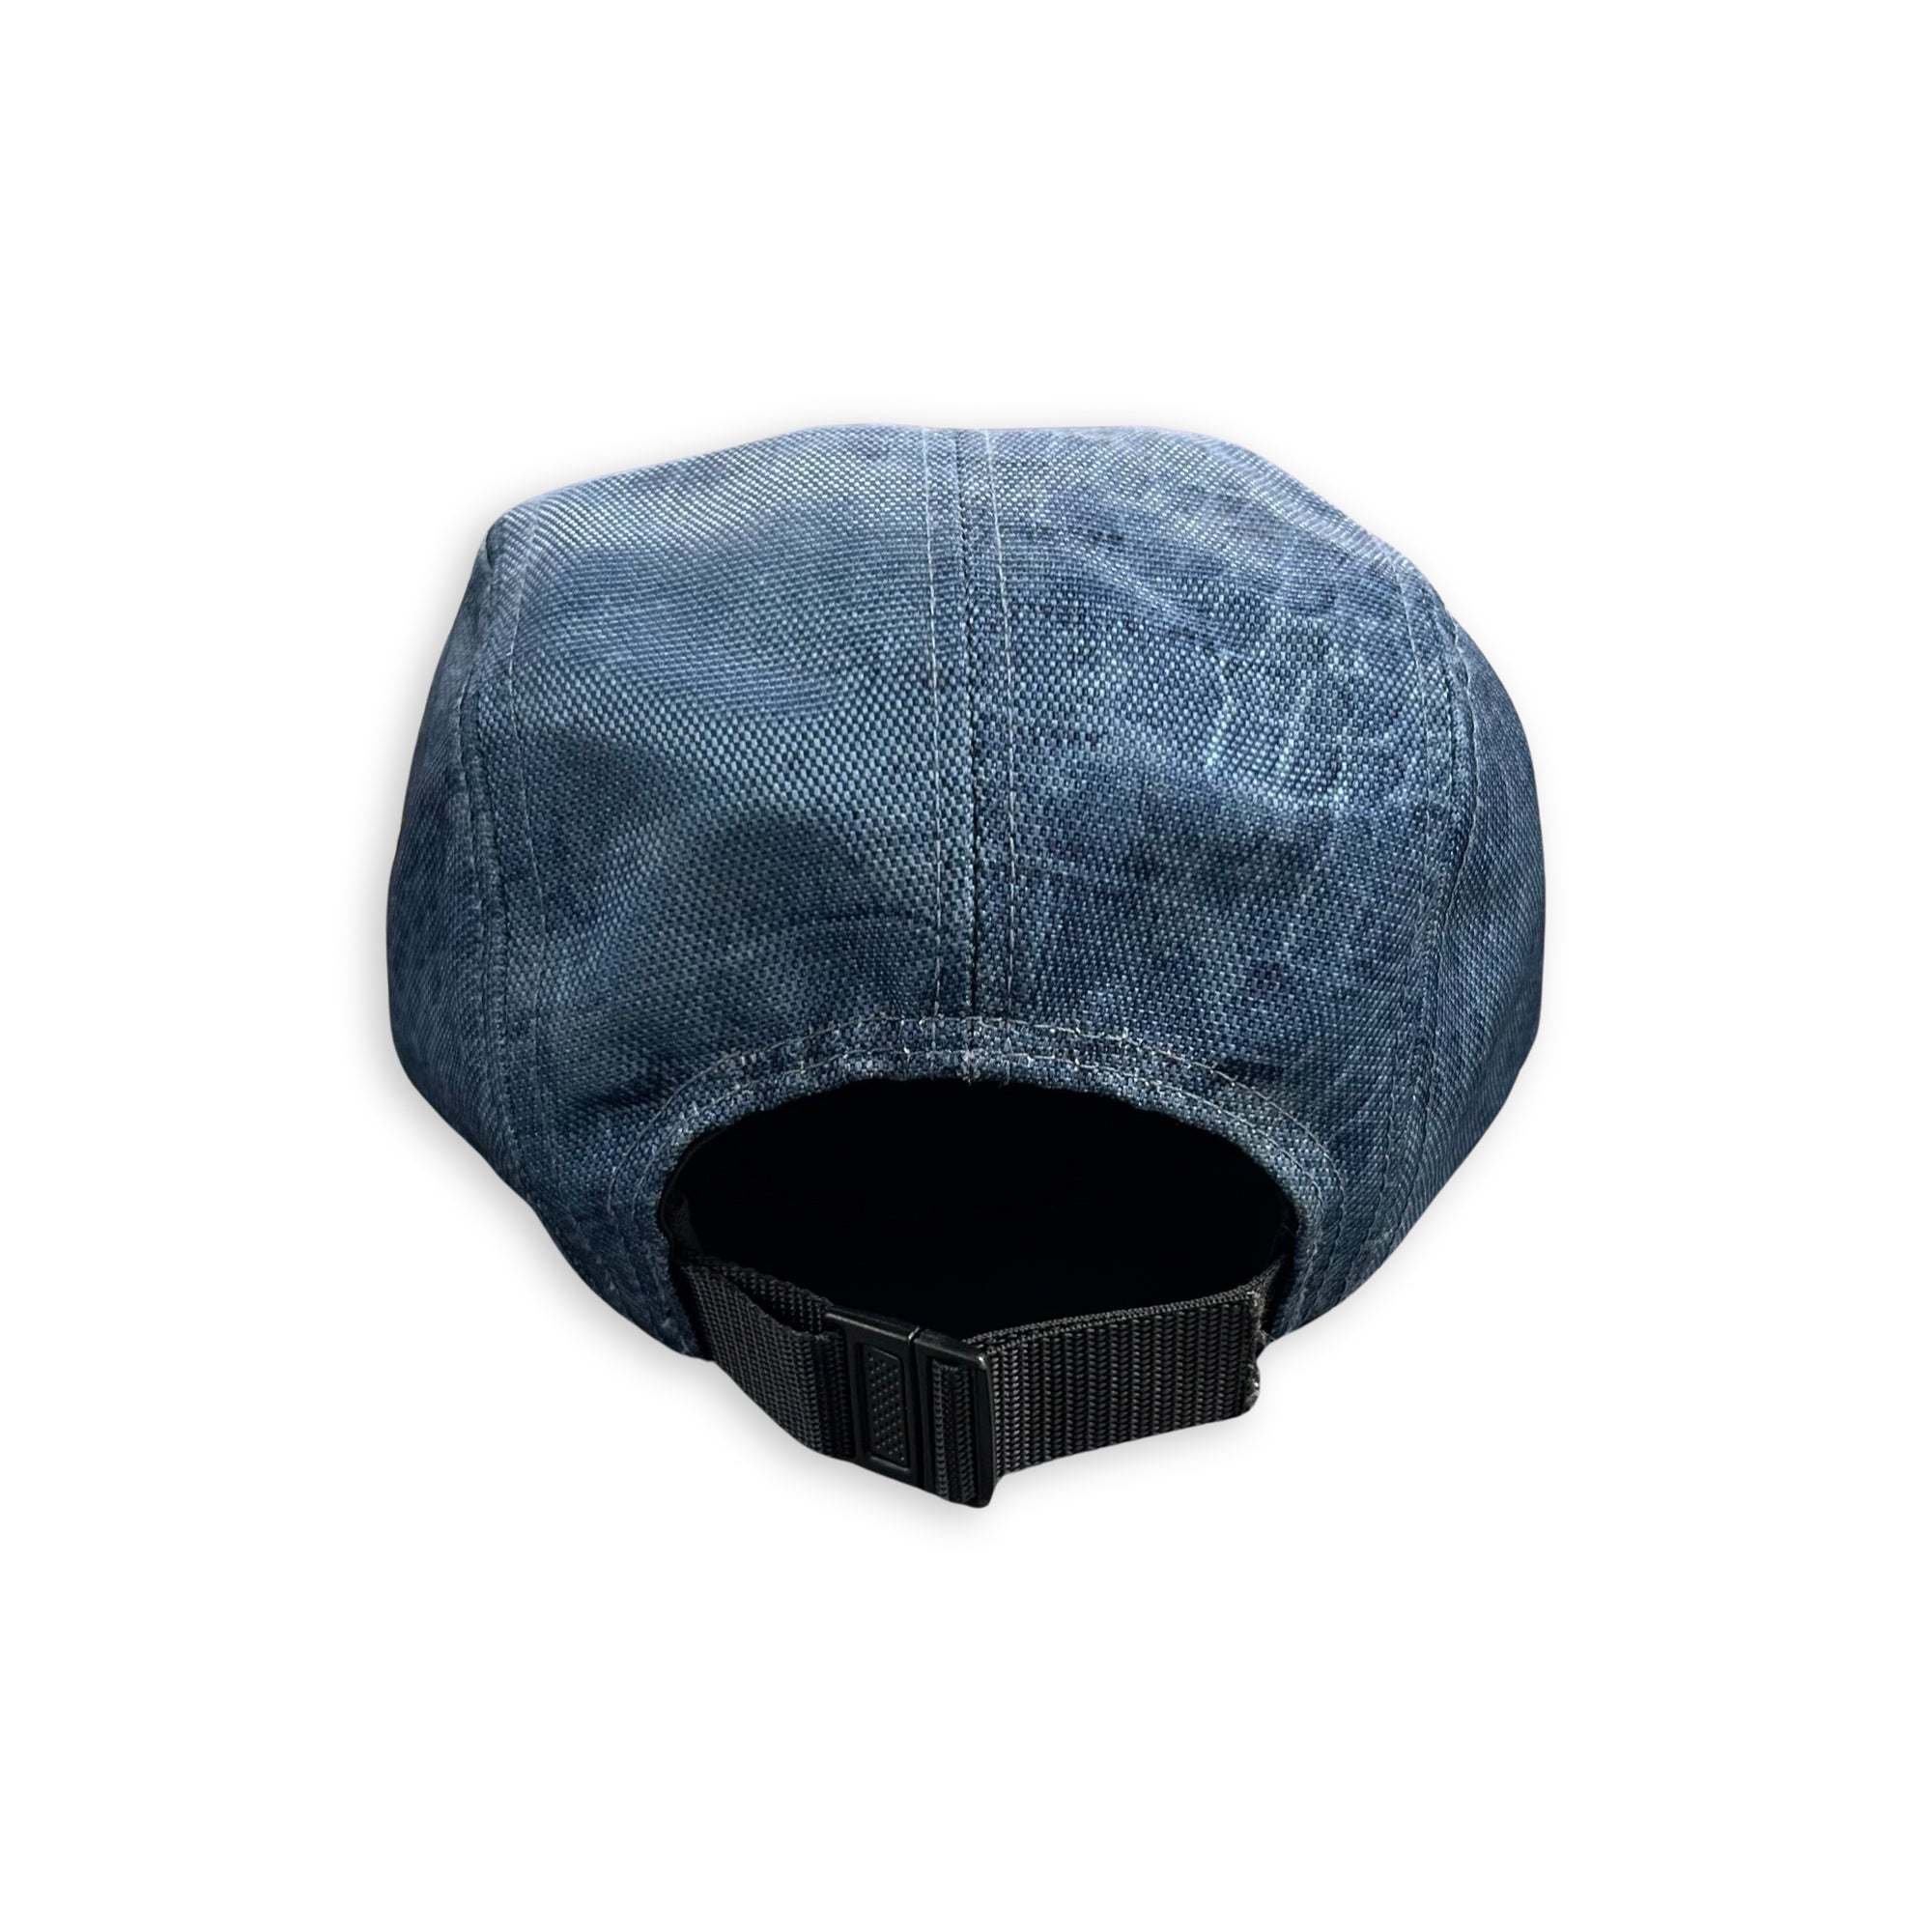 SUPREME CAMP CAP ‘SNAKESKIN BLUE’ *